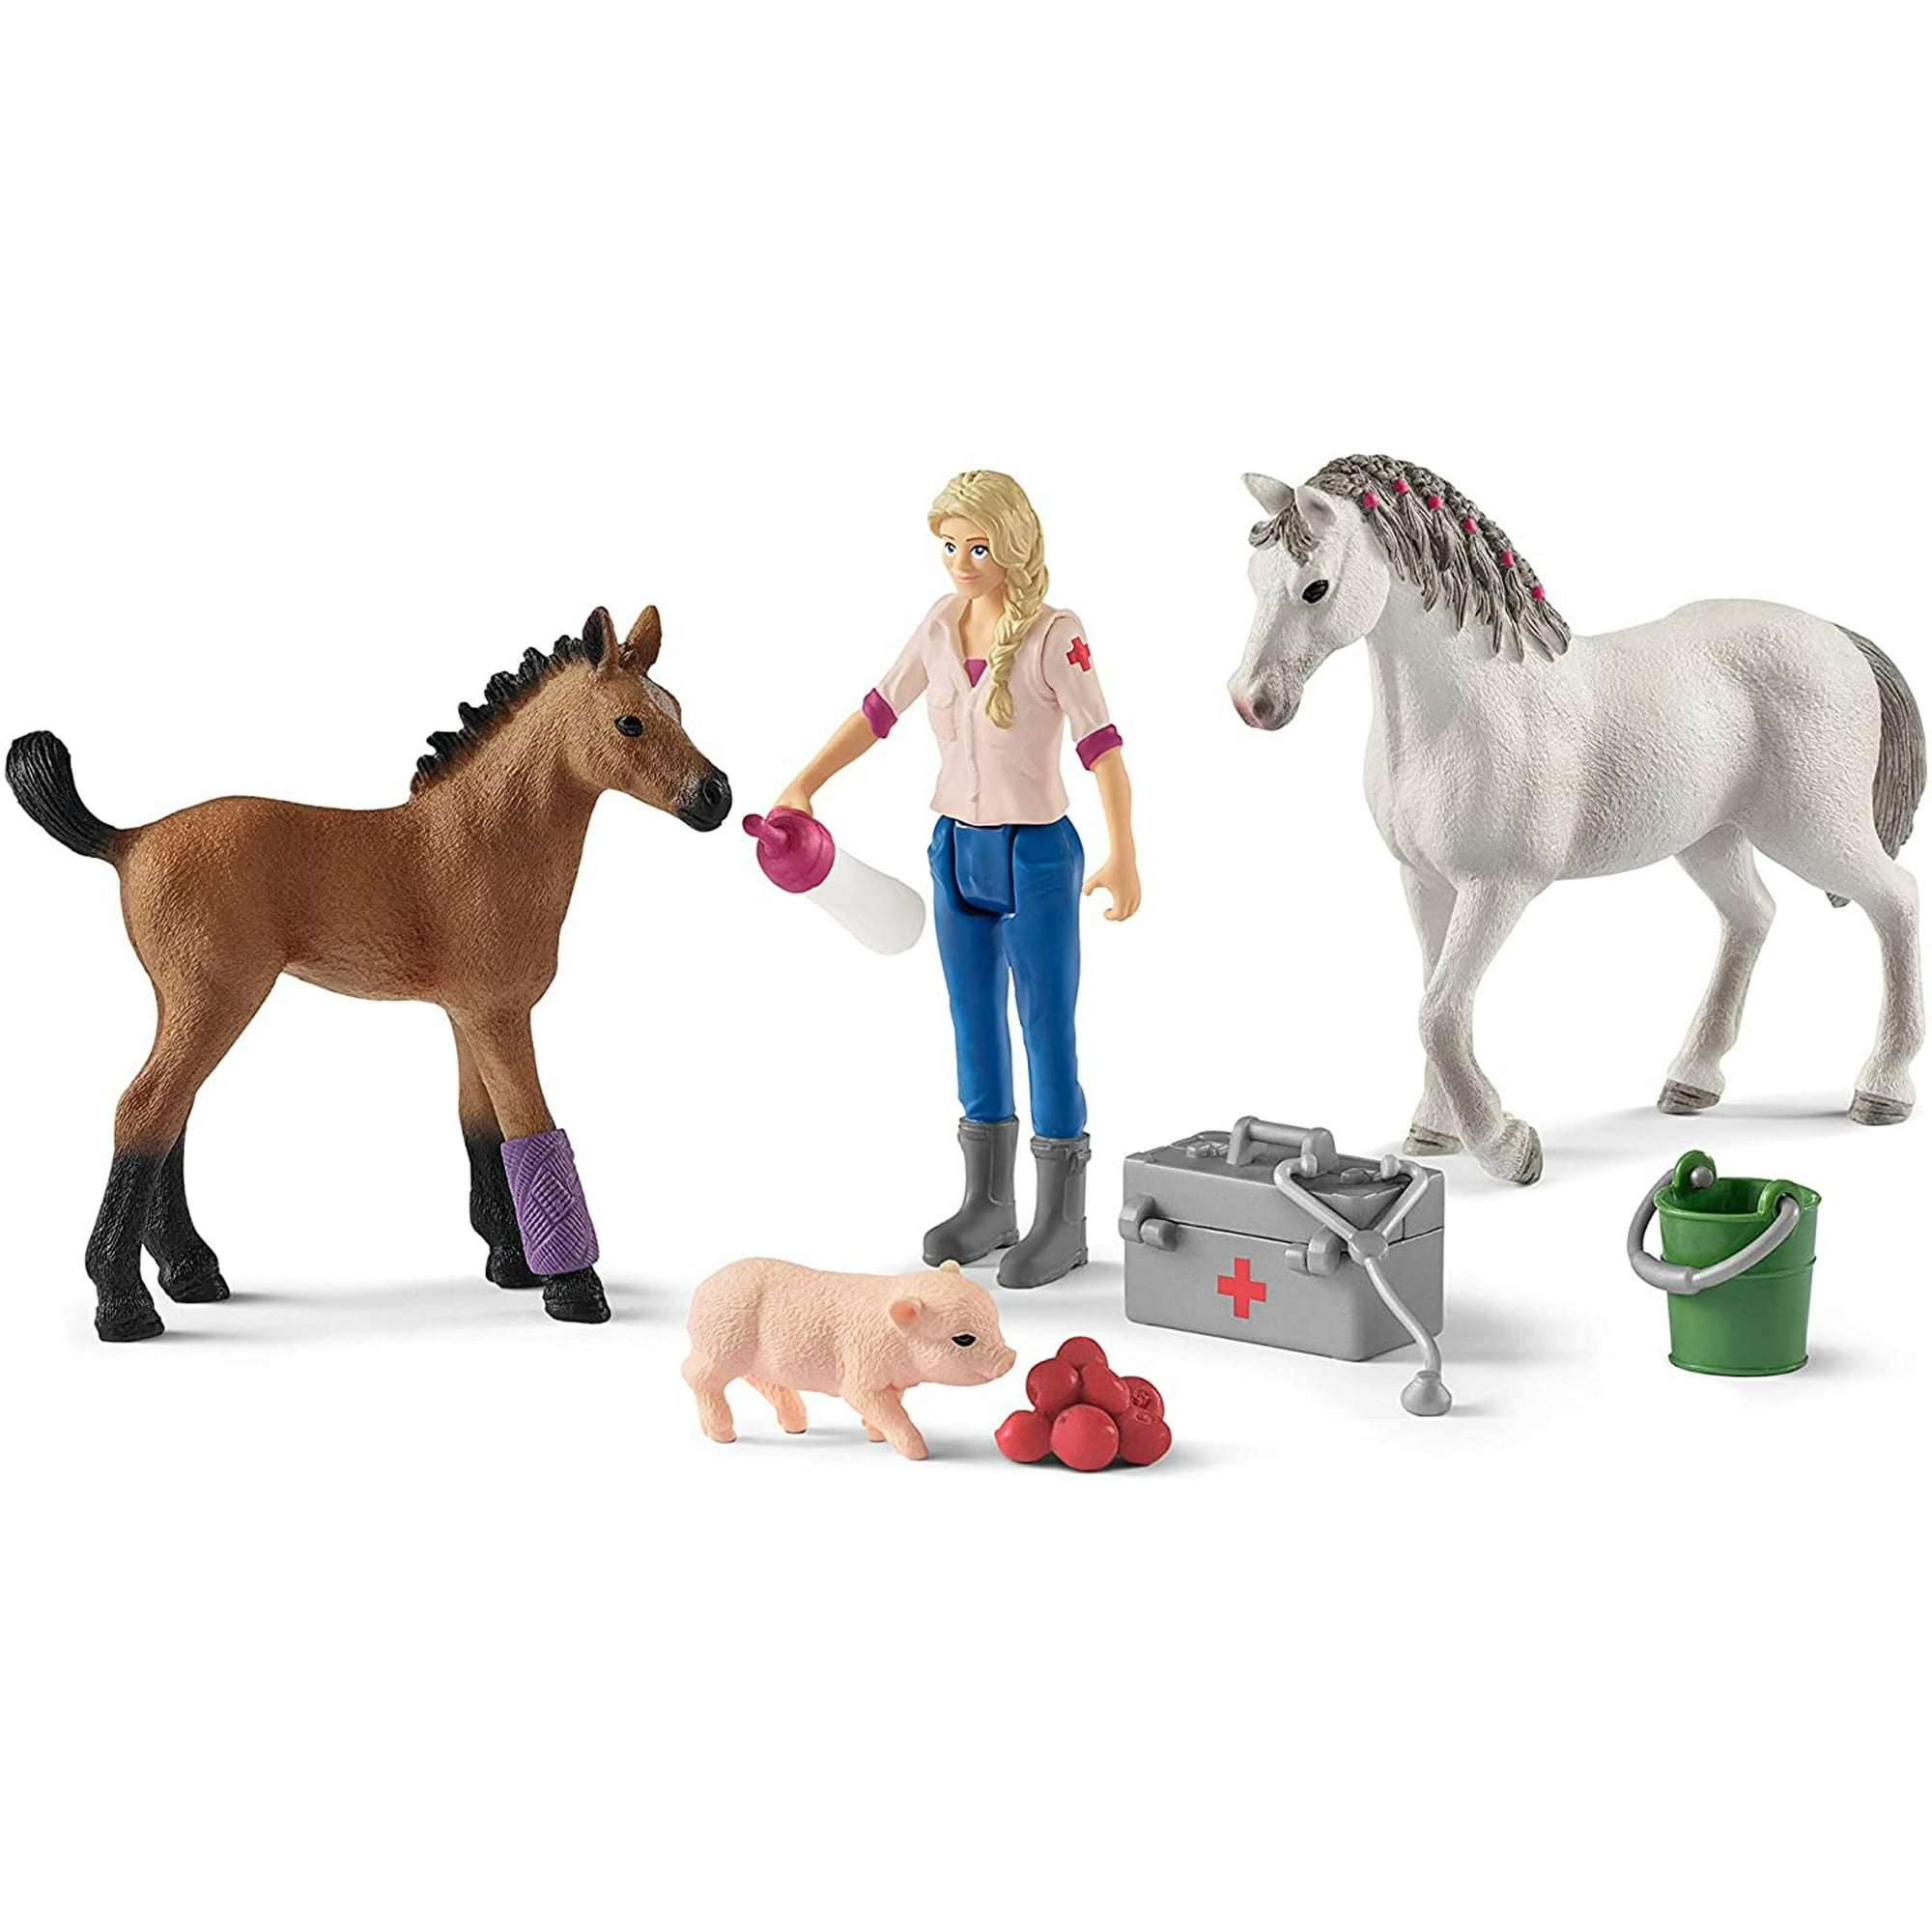 Juego de Caballo Plástico, Juguetes de Juguetes de para Niño Precisión y  Detalles Auténticos Sunnimix Juego de figura caballo